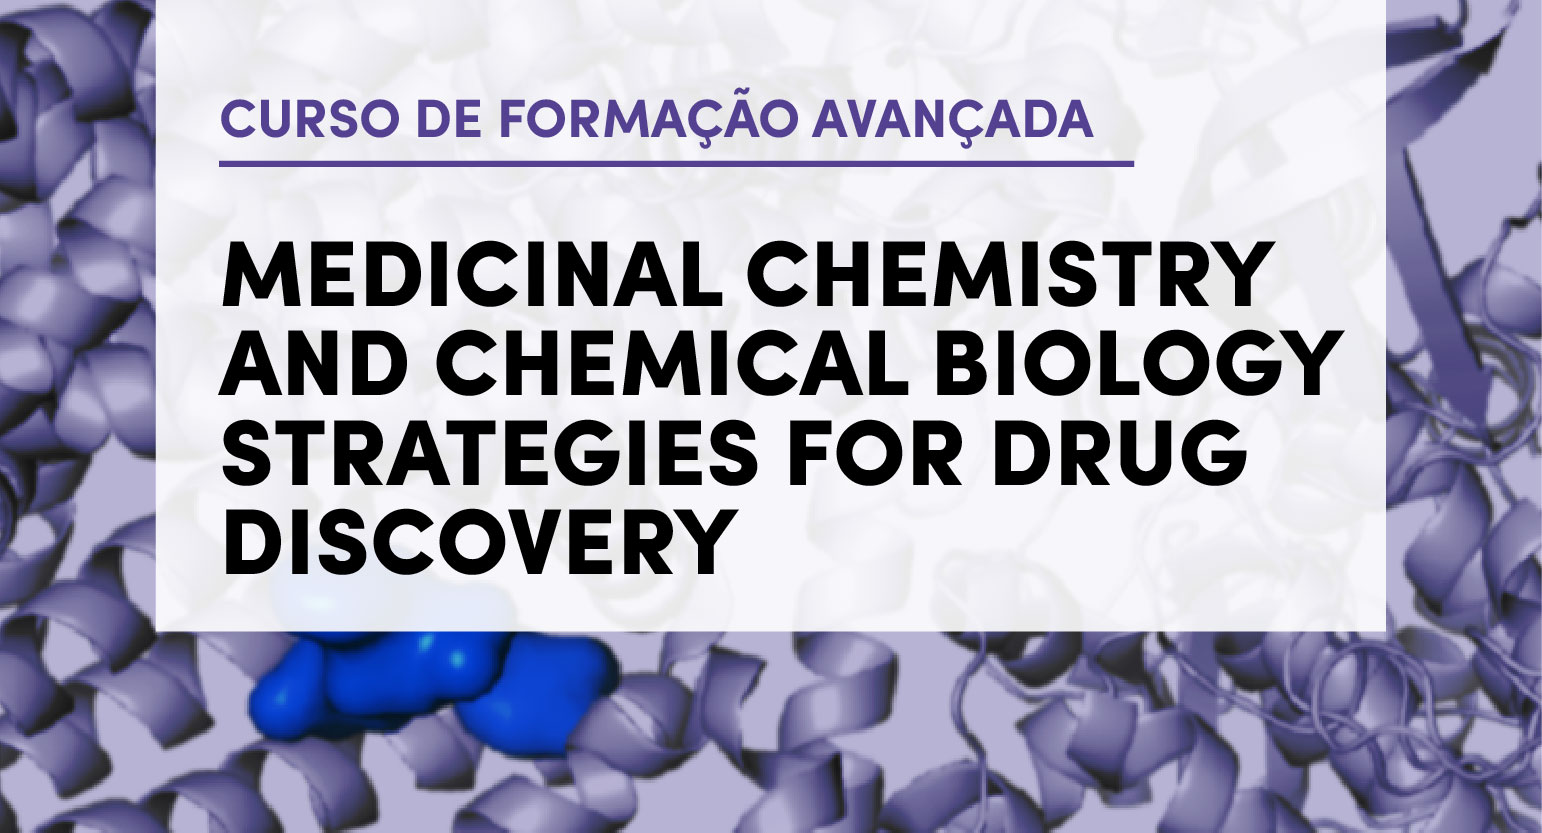 Medicinal Chemistry and Chemical Biology Strategies for Drug Discovery | Formação Avançada